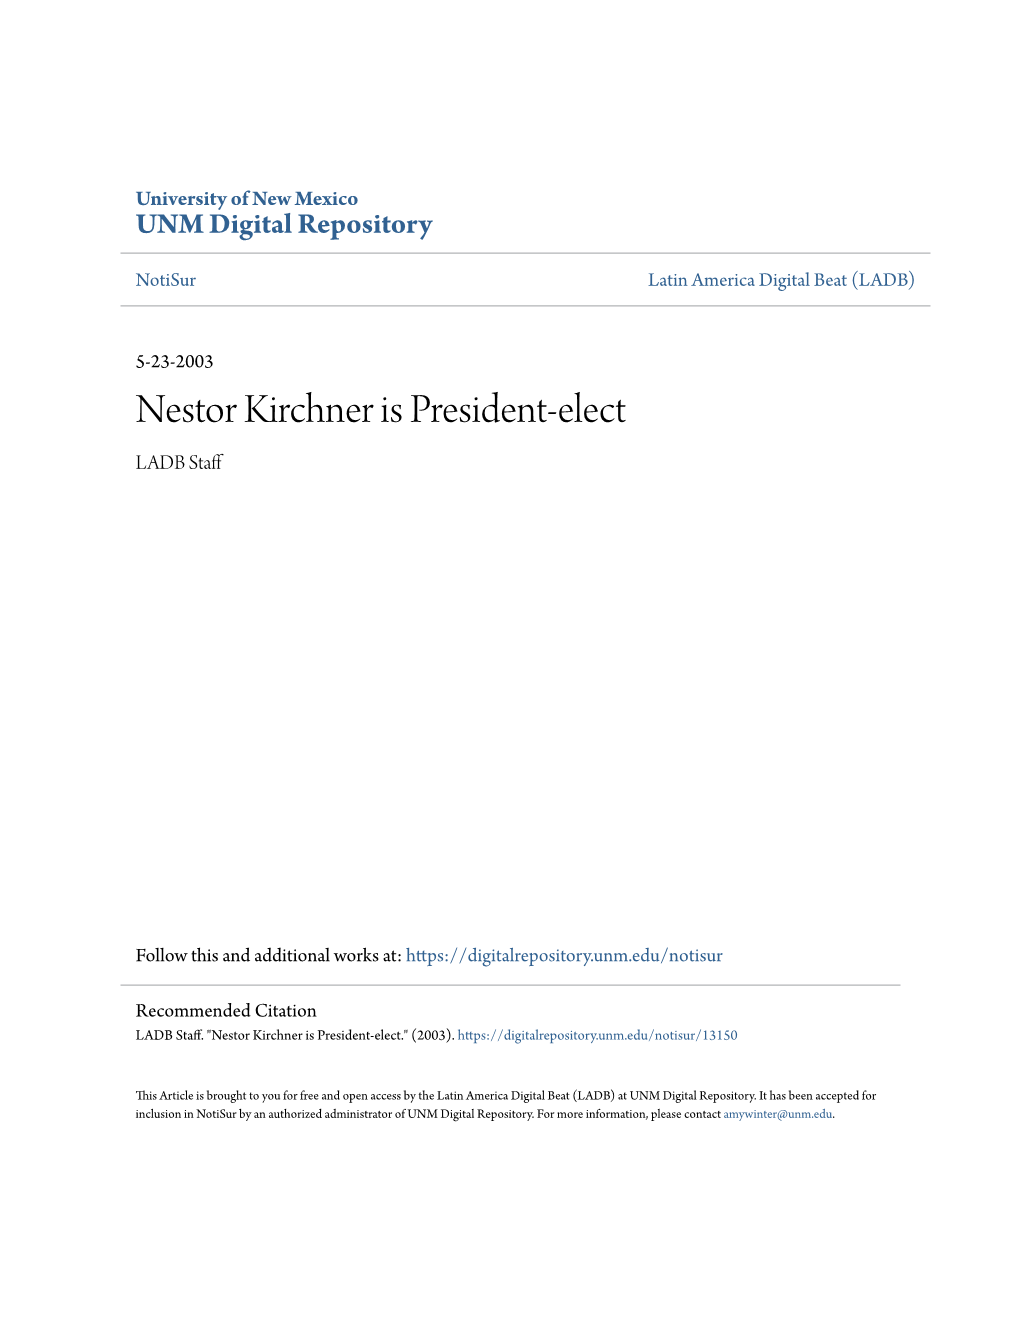 Nestor Kirchner Is President-Elect LADB Staff